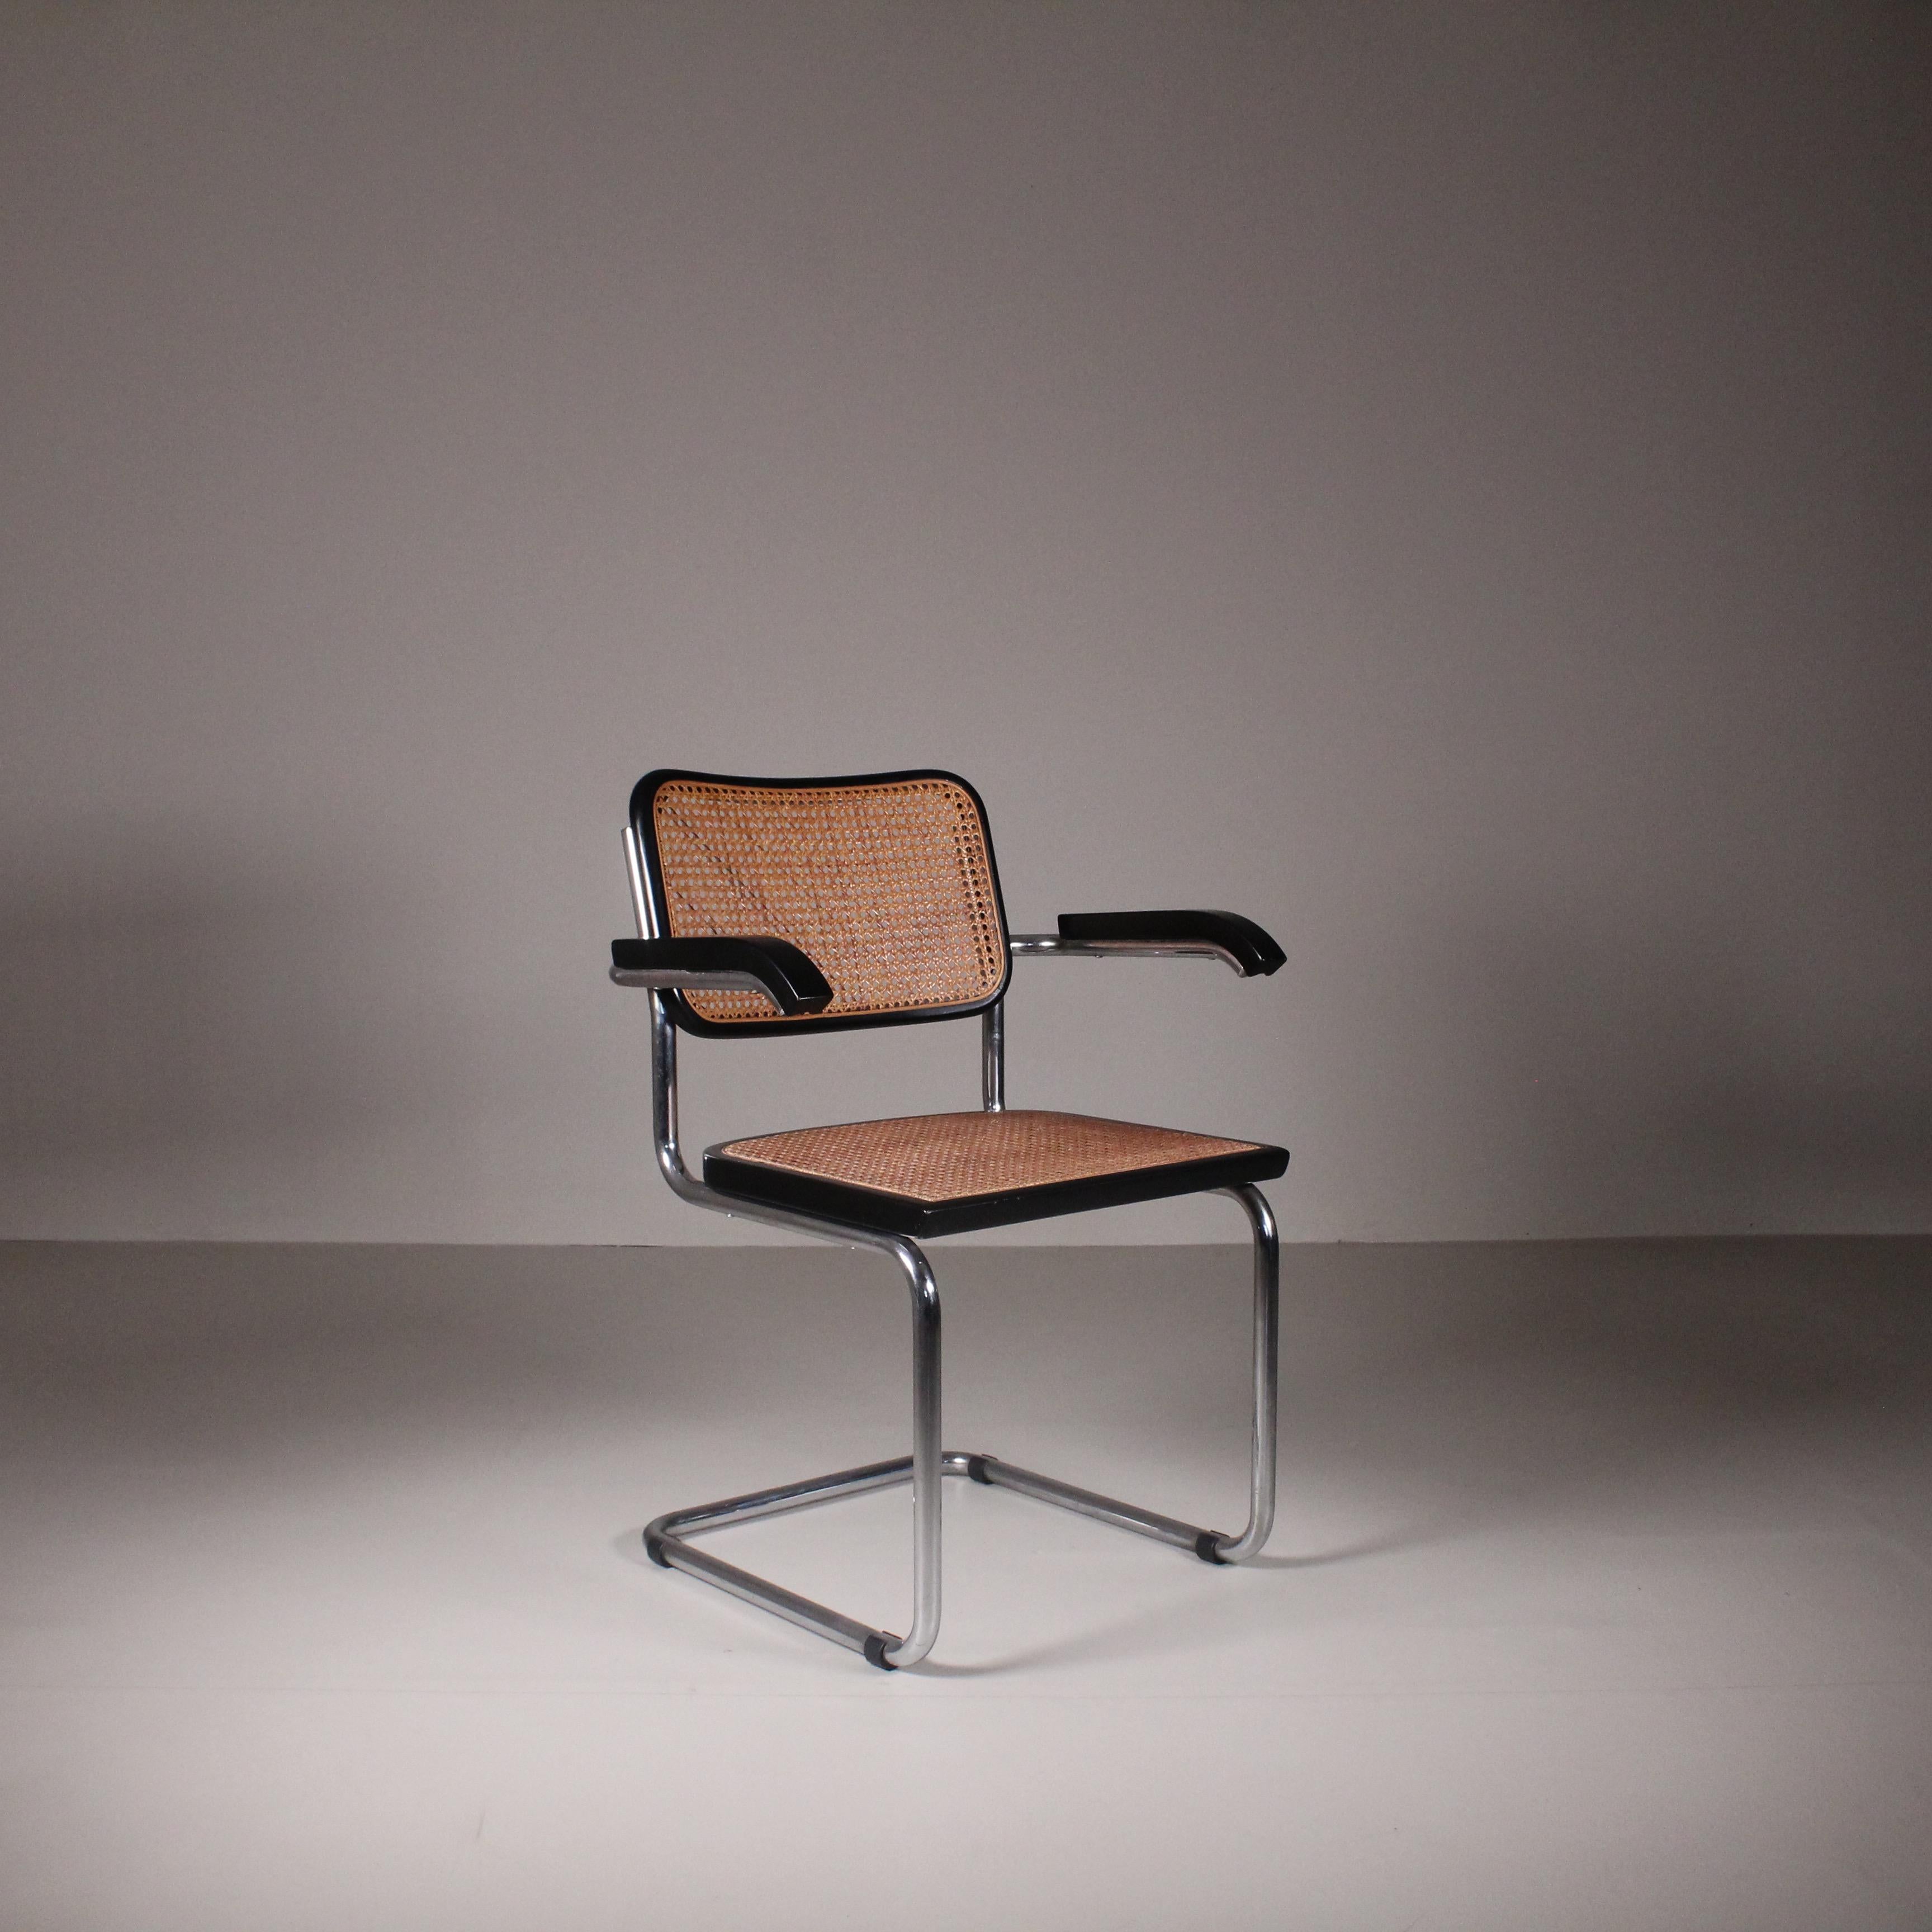 Italian Set of 2 Chairs Cesca, Marcel Breuer, Gavina, 1970 For Sale